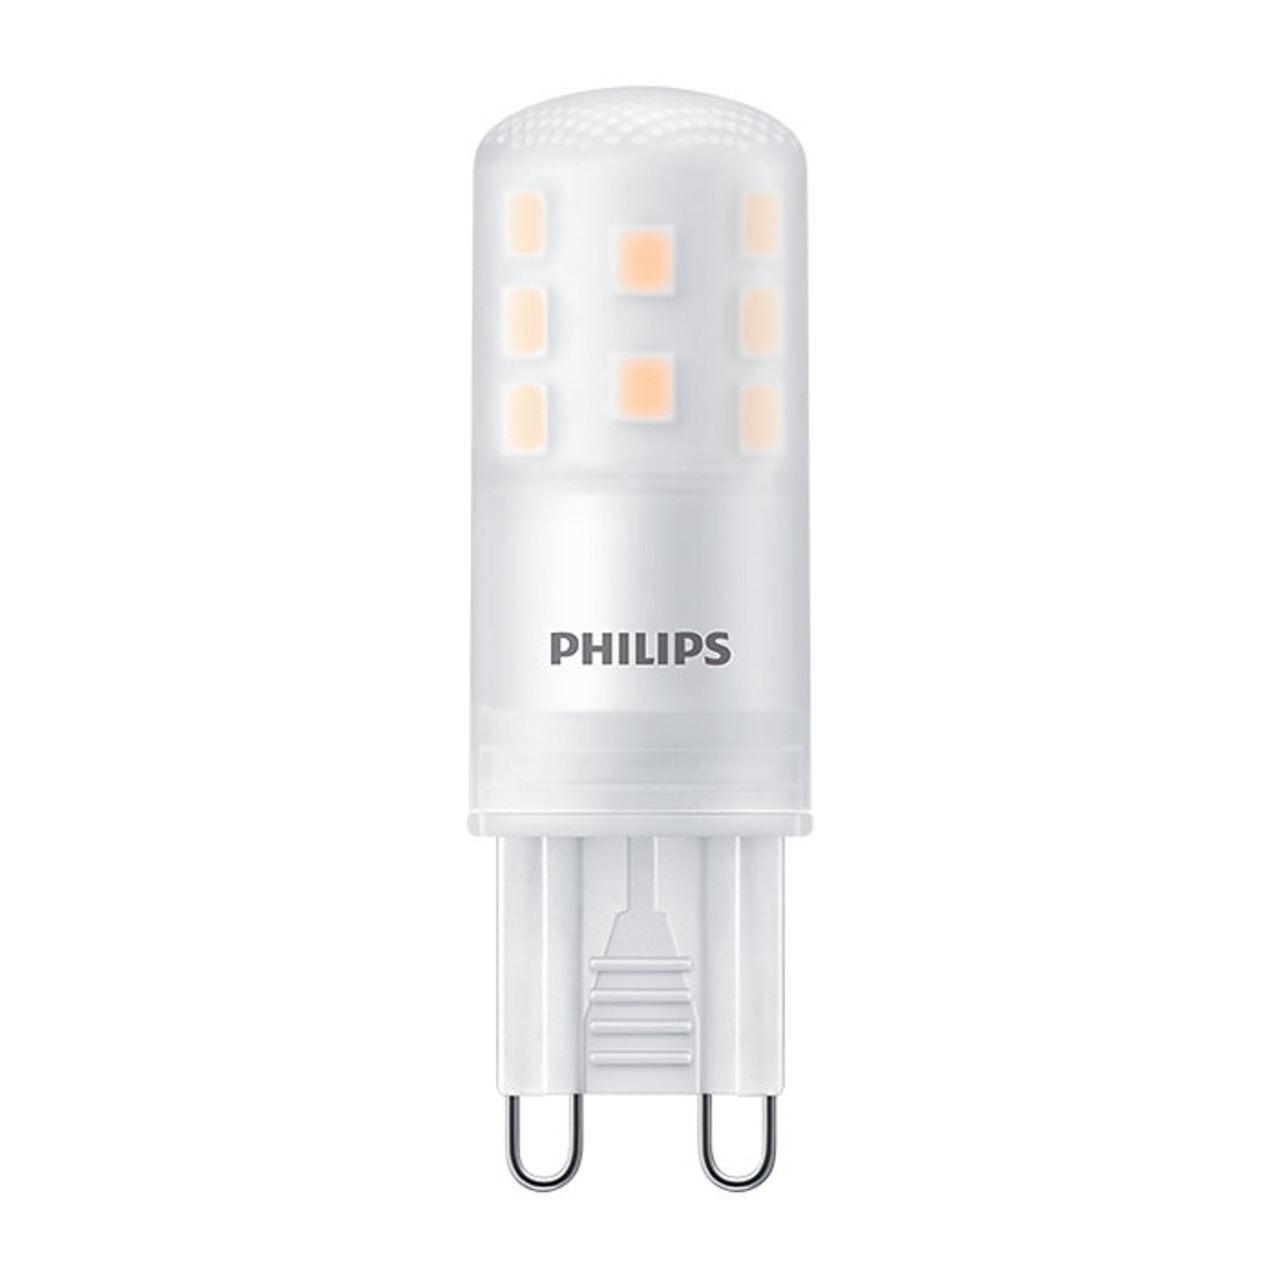 Philips 2-6-W-G9-LED-Lampe CorePro LEDcapsule- 300 lm- dimmbar- warmweiss